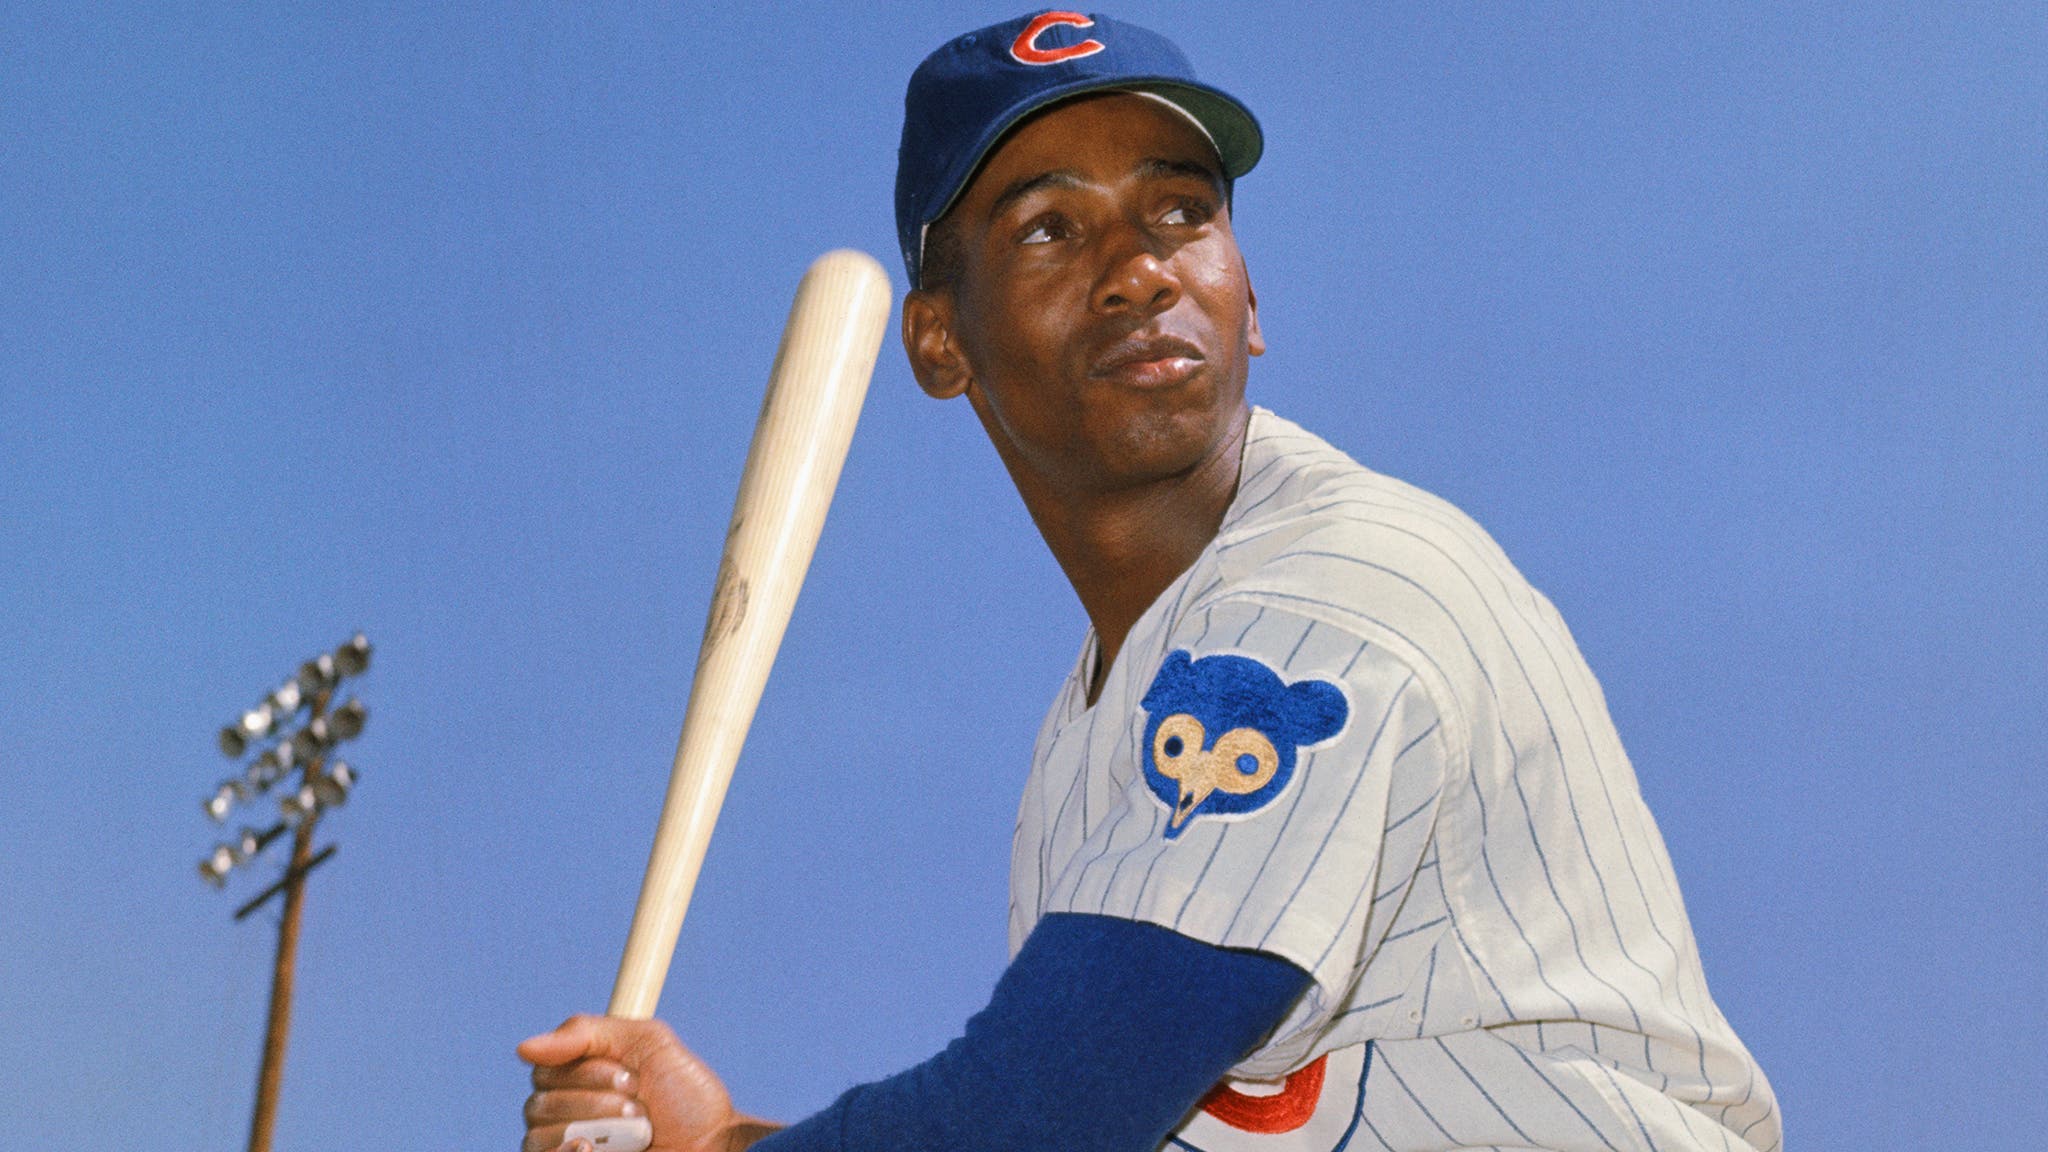 &quot;Mr. Cub&quot; Ernie Banks of the Chicago Cubs